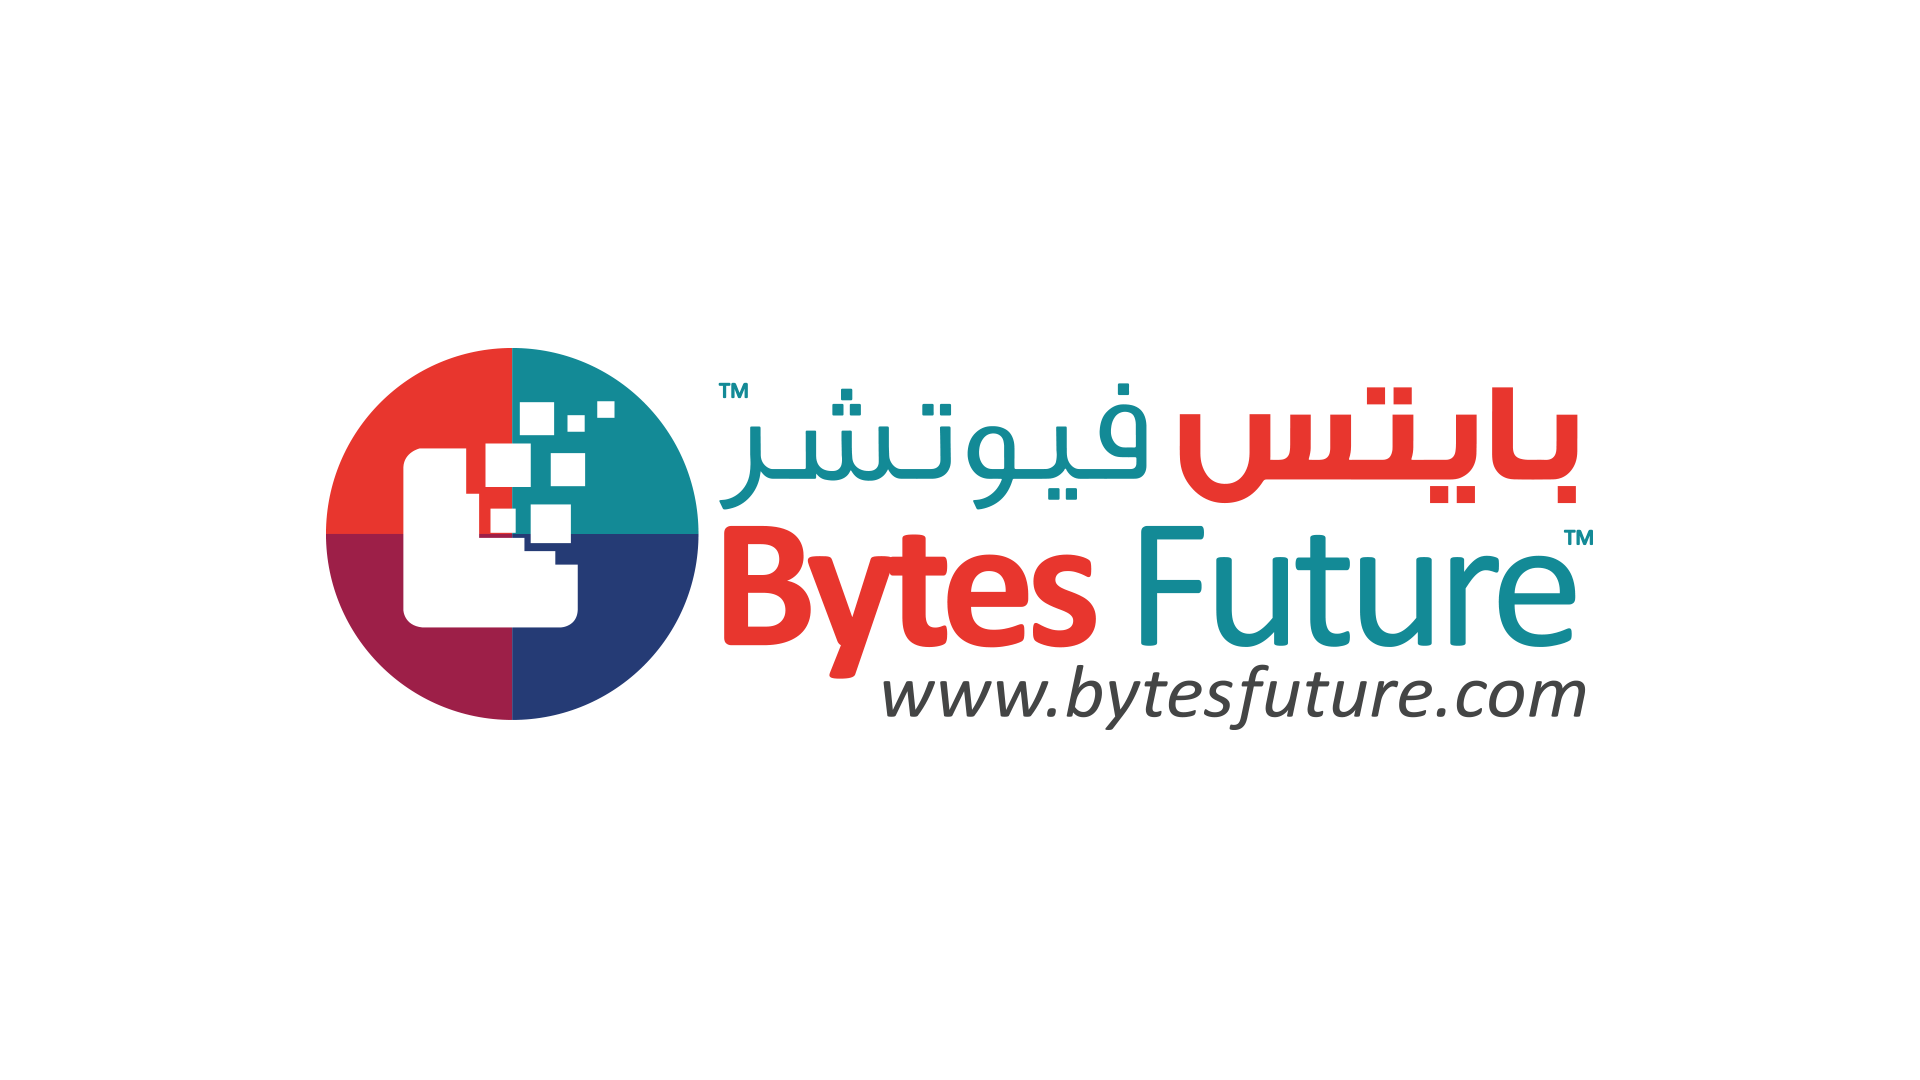 Bytes Future - Website Development Company in Riyadh, Saudi Arabia